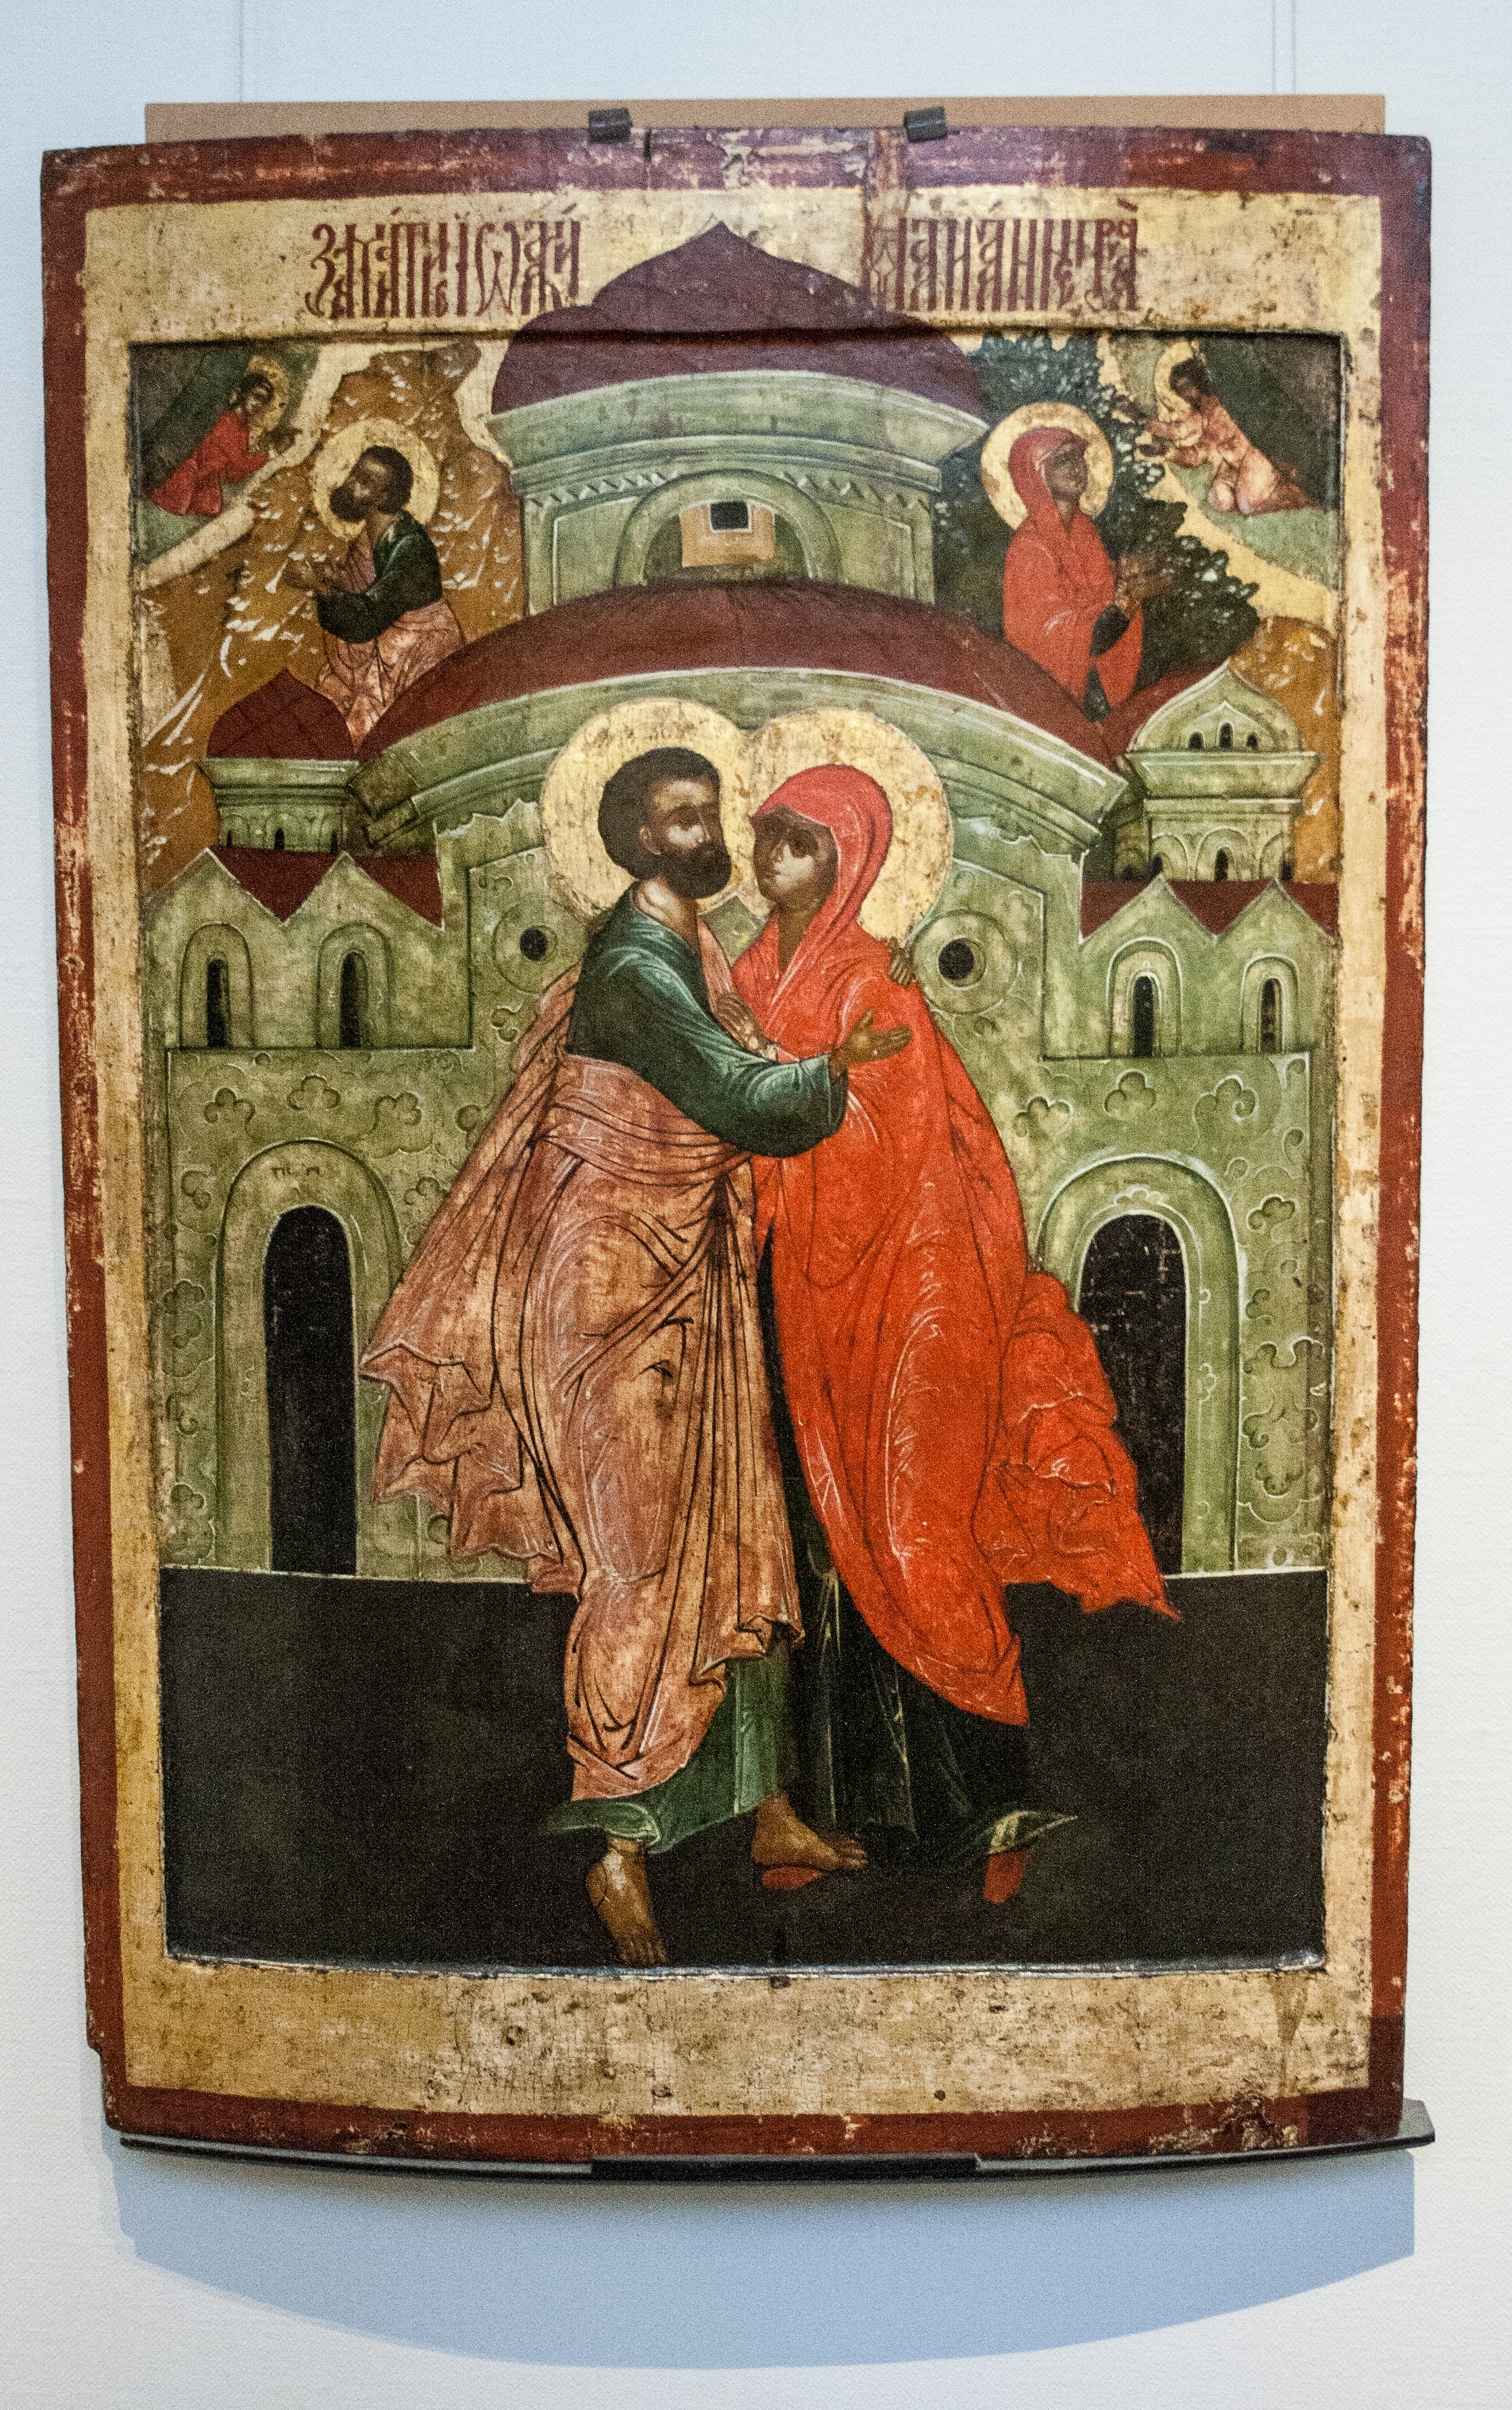 The embrace of Joachim and Anna, PD-Art, via Wikimedia Commons